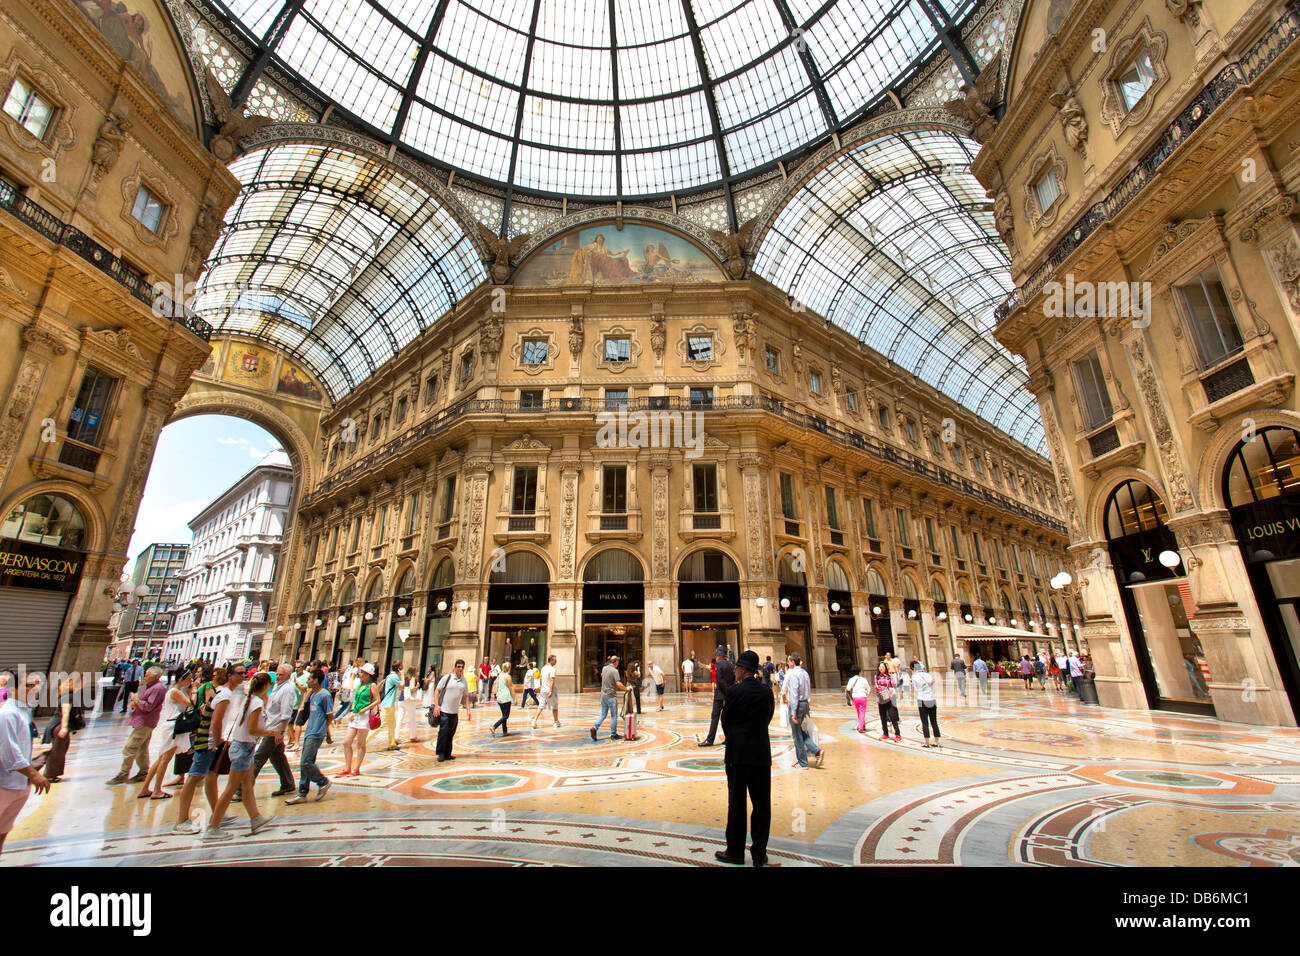 The main shopping mall 'Galleria Vittorio Emanuele 11' in Milan, Italy. Stock Photo